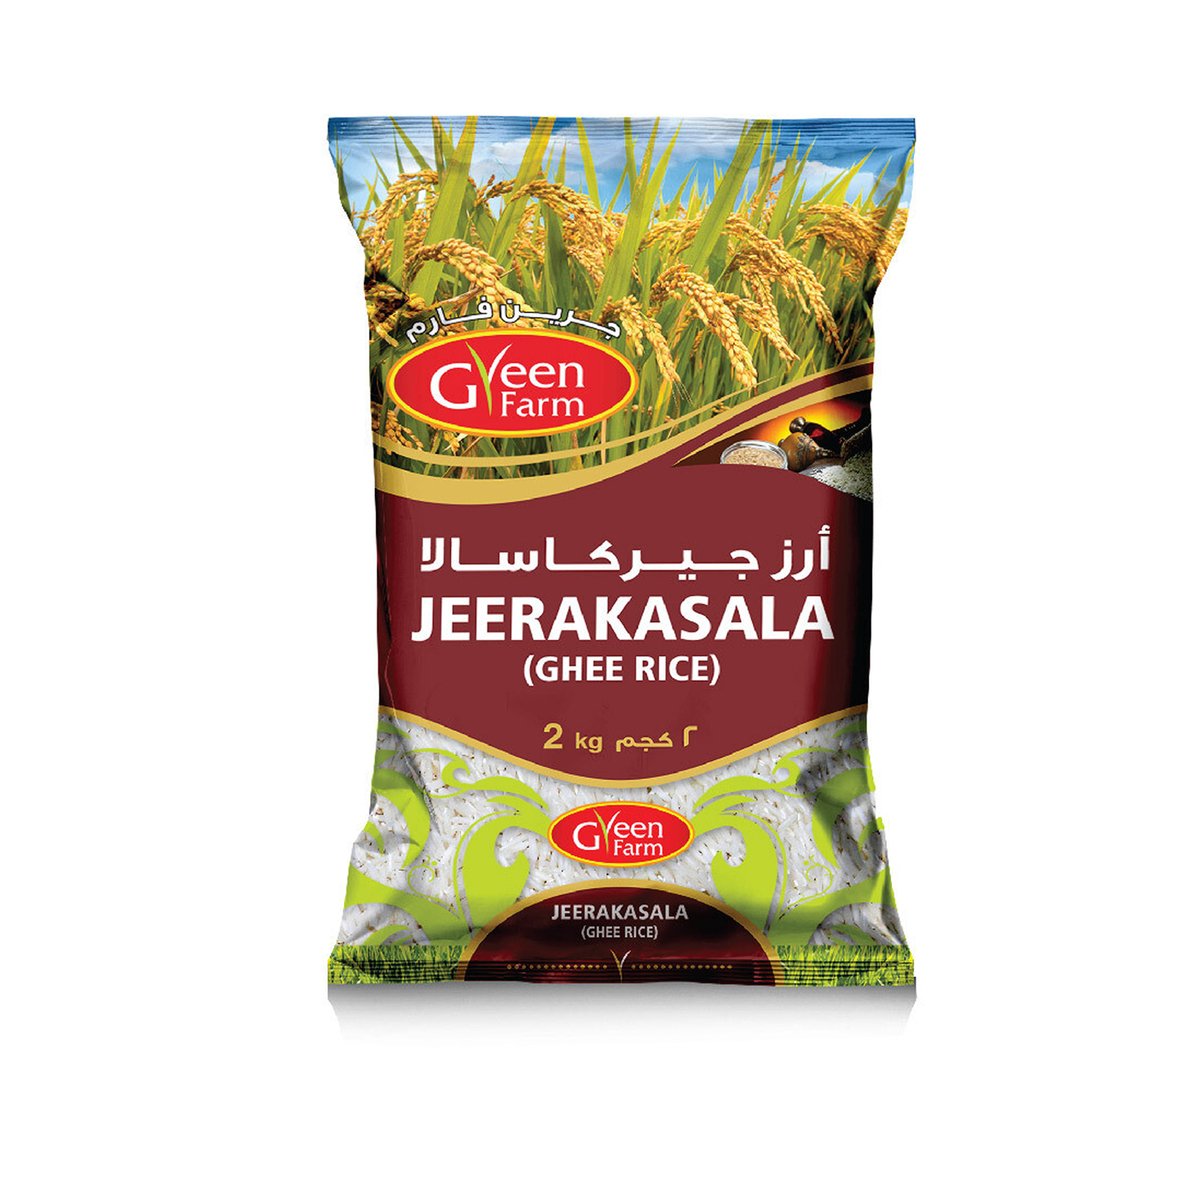 Green Farm Jeerakasala Rice 2 kg